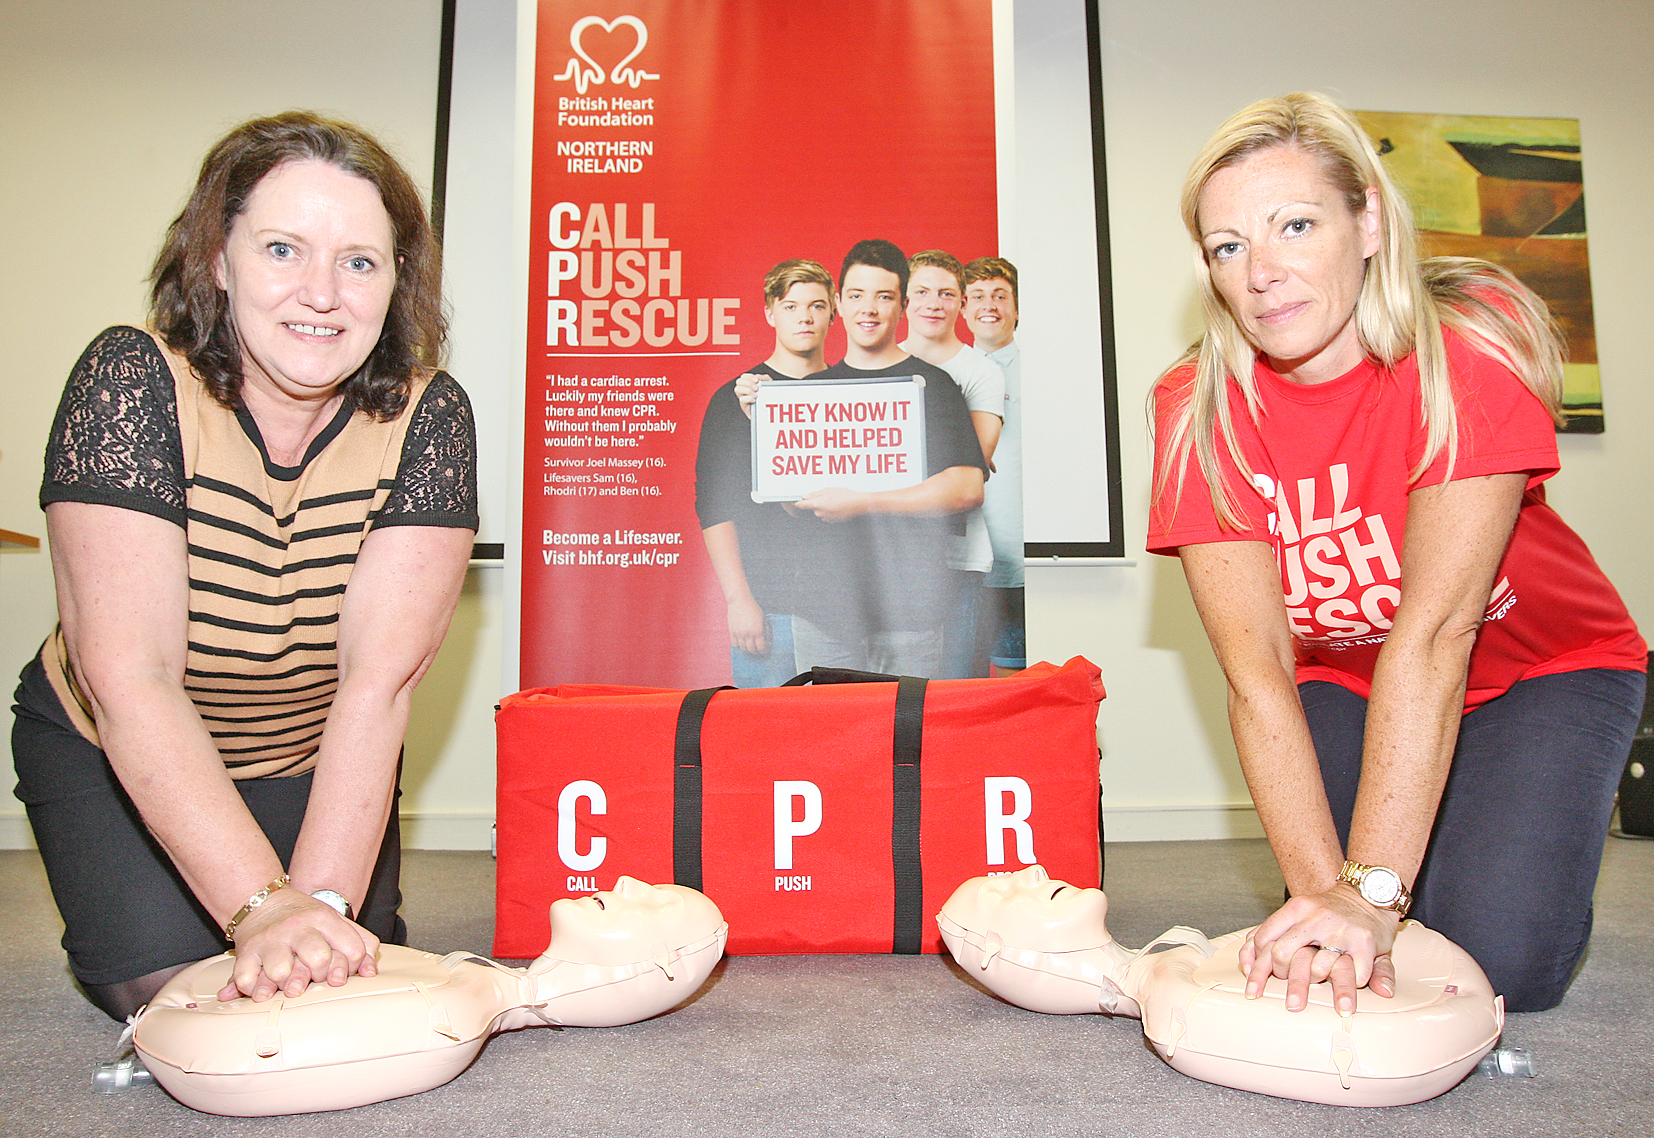 Cardiac arrest survivor Lynda Donaldson (left) with Stephanie Leckey of the British Heart Foundation NI demonstrating life-saving CPR techniques